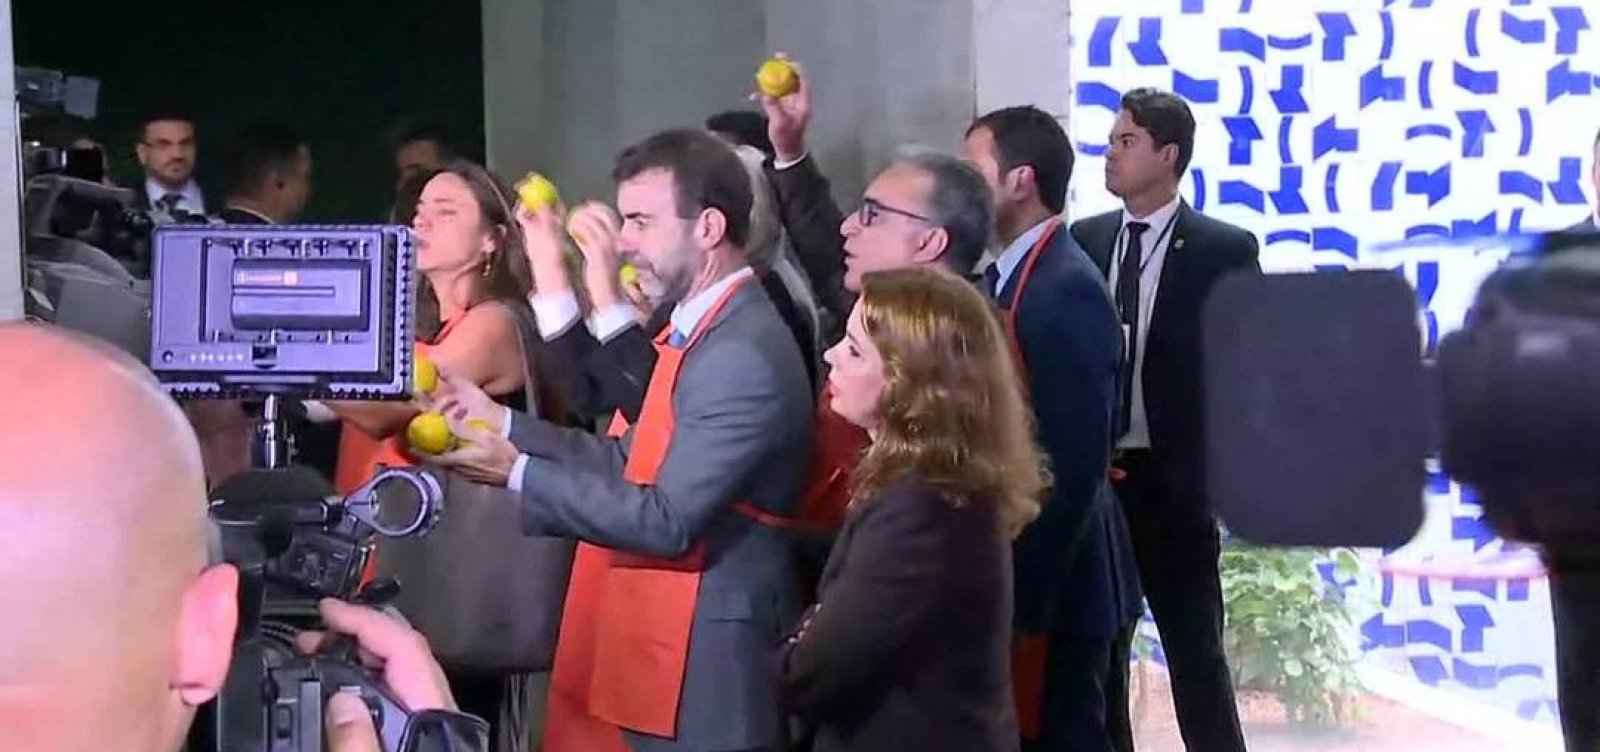 [OposiÃ§Ã£o leva laranjas a Bolsonaro durante apresentaÃ§Ã£o proposta de reforma da PrevidÃªncia]